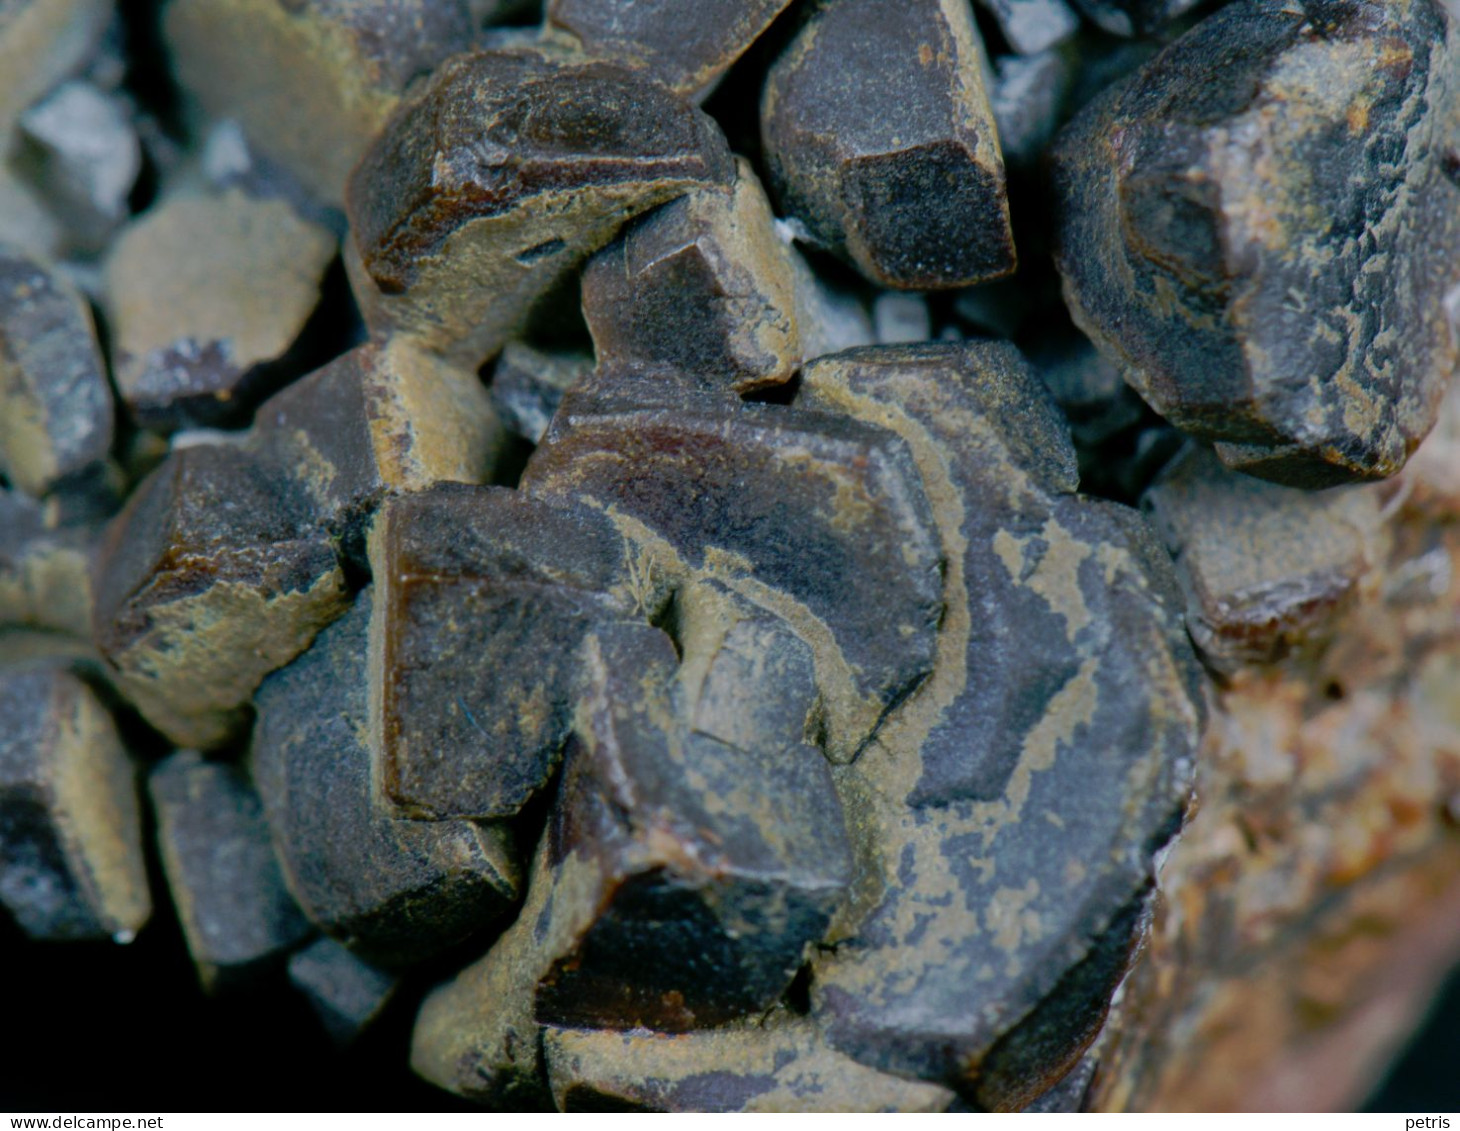 Mineral - Endlichite Toussit, Marocco) - Lot. 722 - Minerali